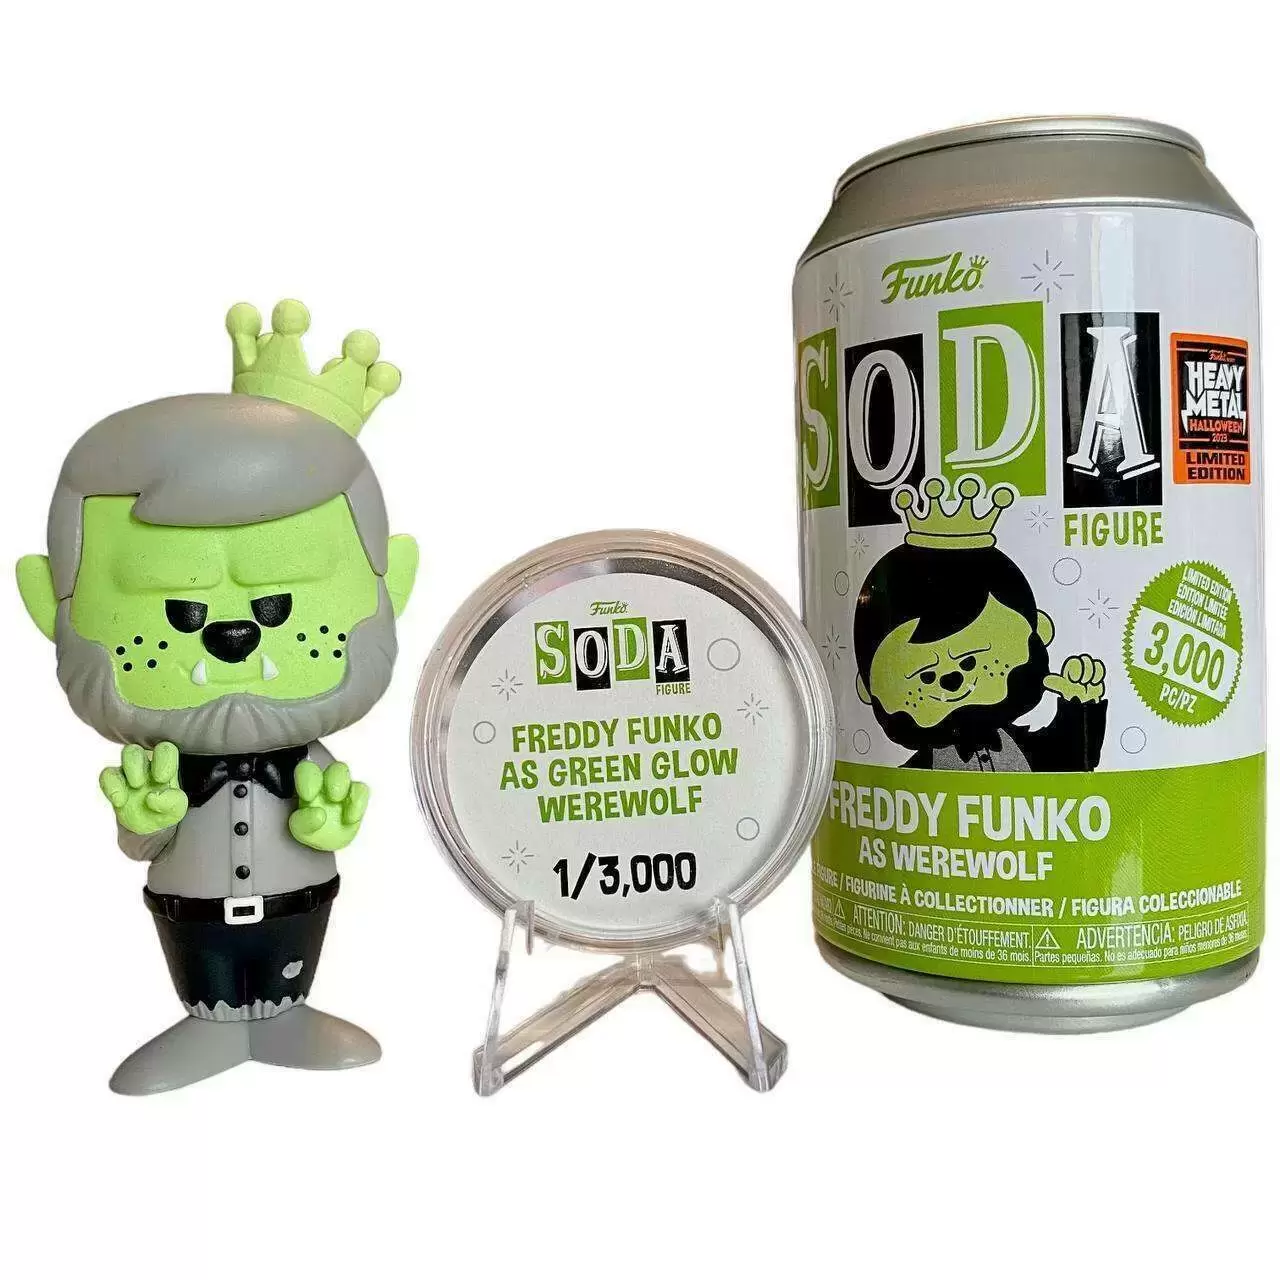 Vinyl Soda! - Freddy Funko as Werewolf Green Glow